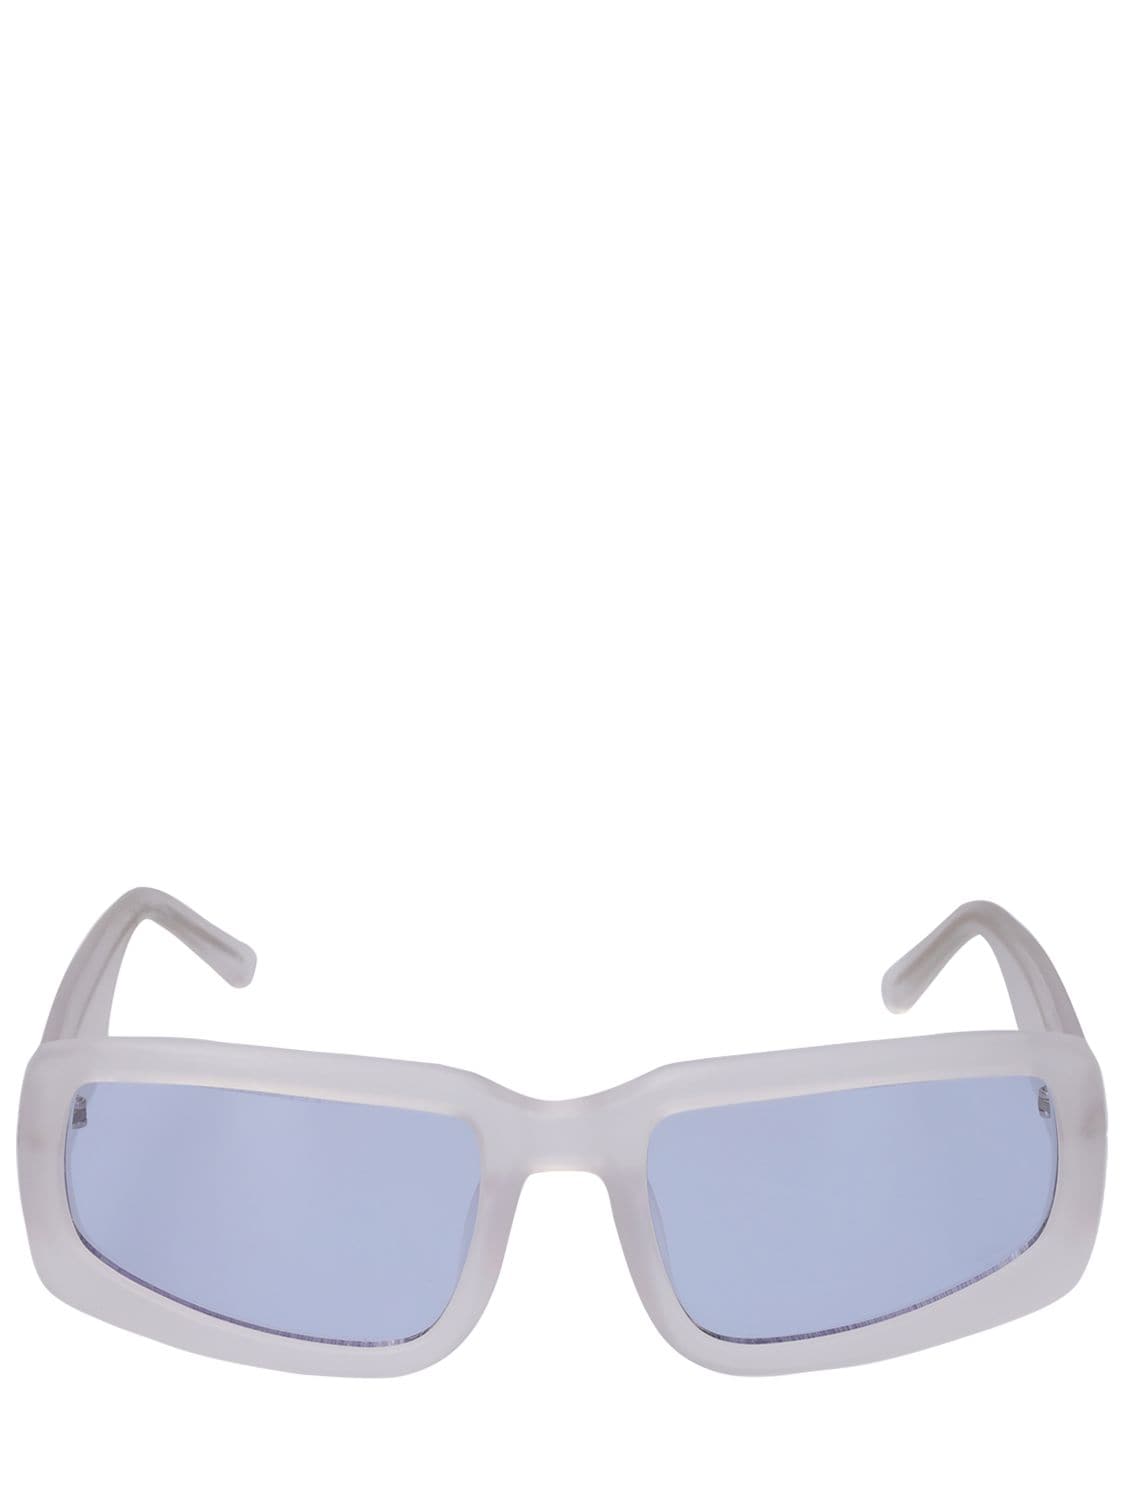 Image of Soto-ii Matte Glacial Sunglasses